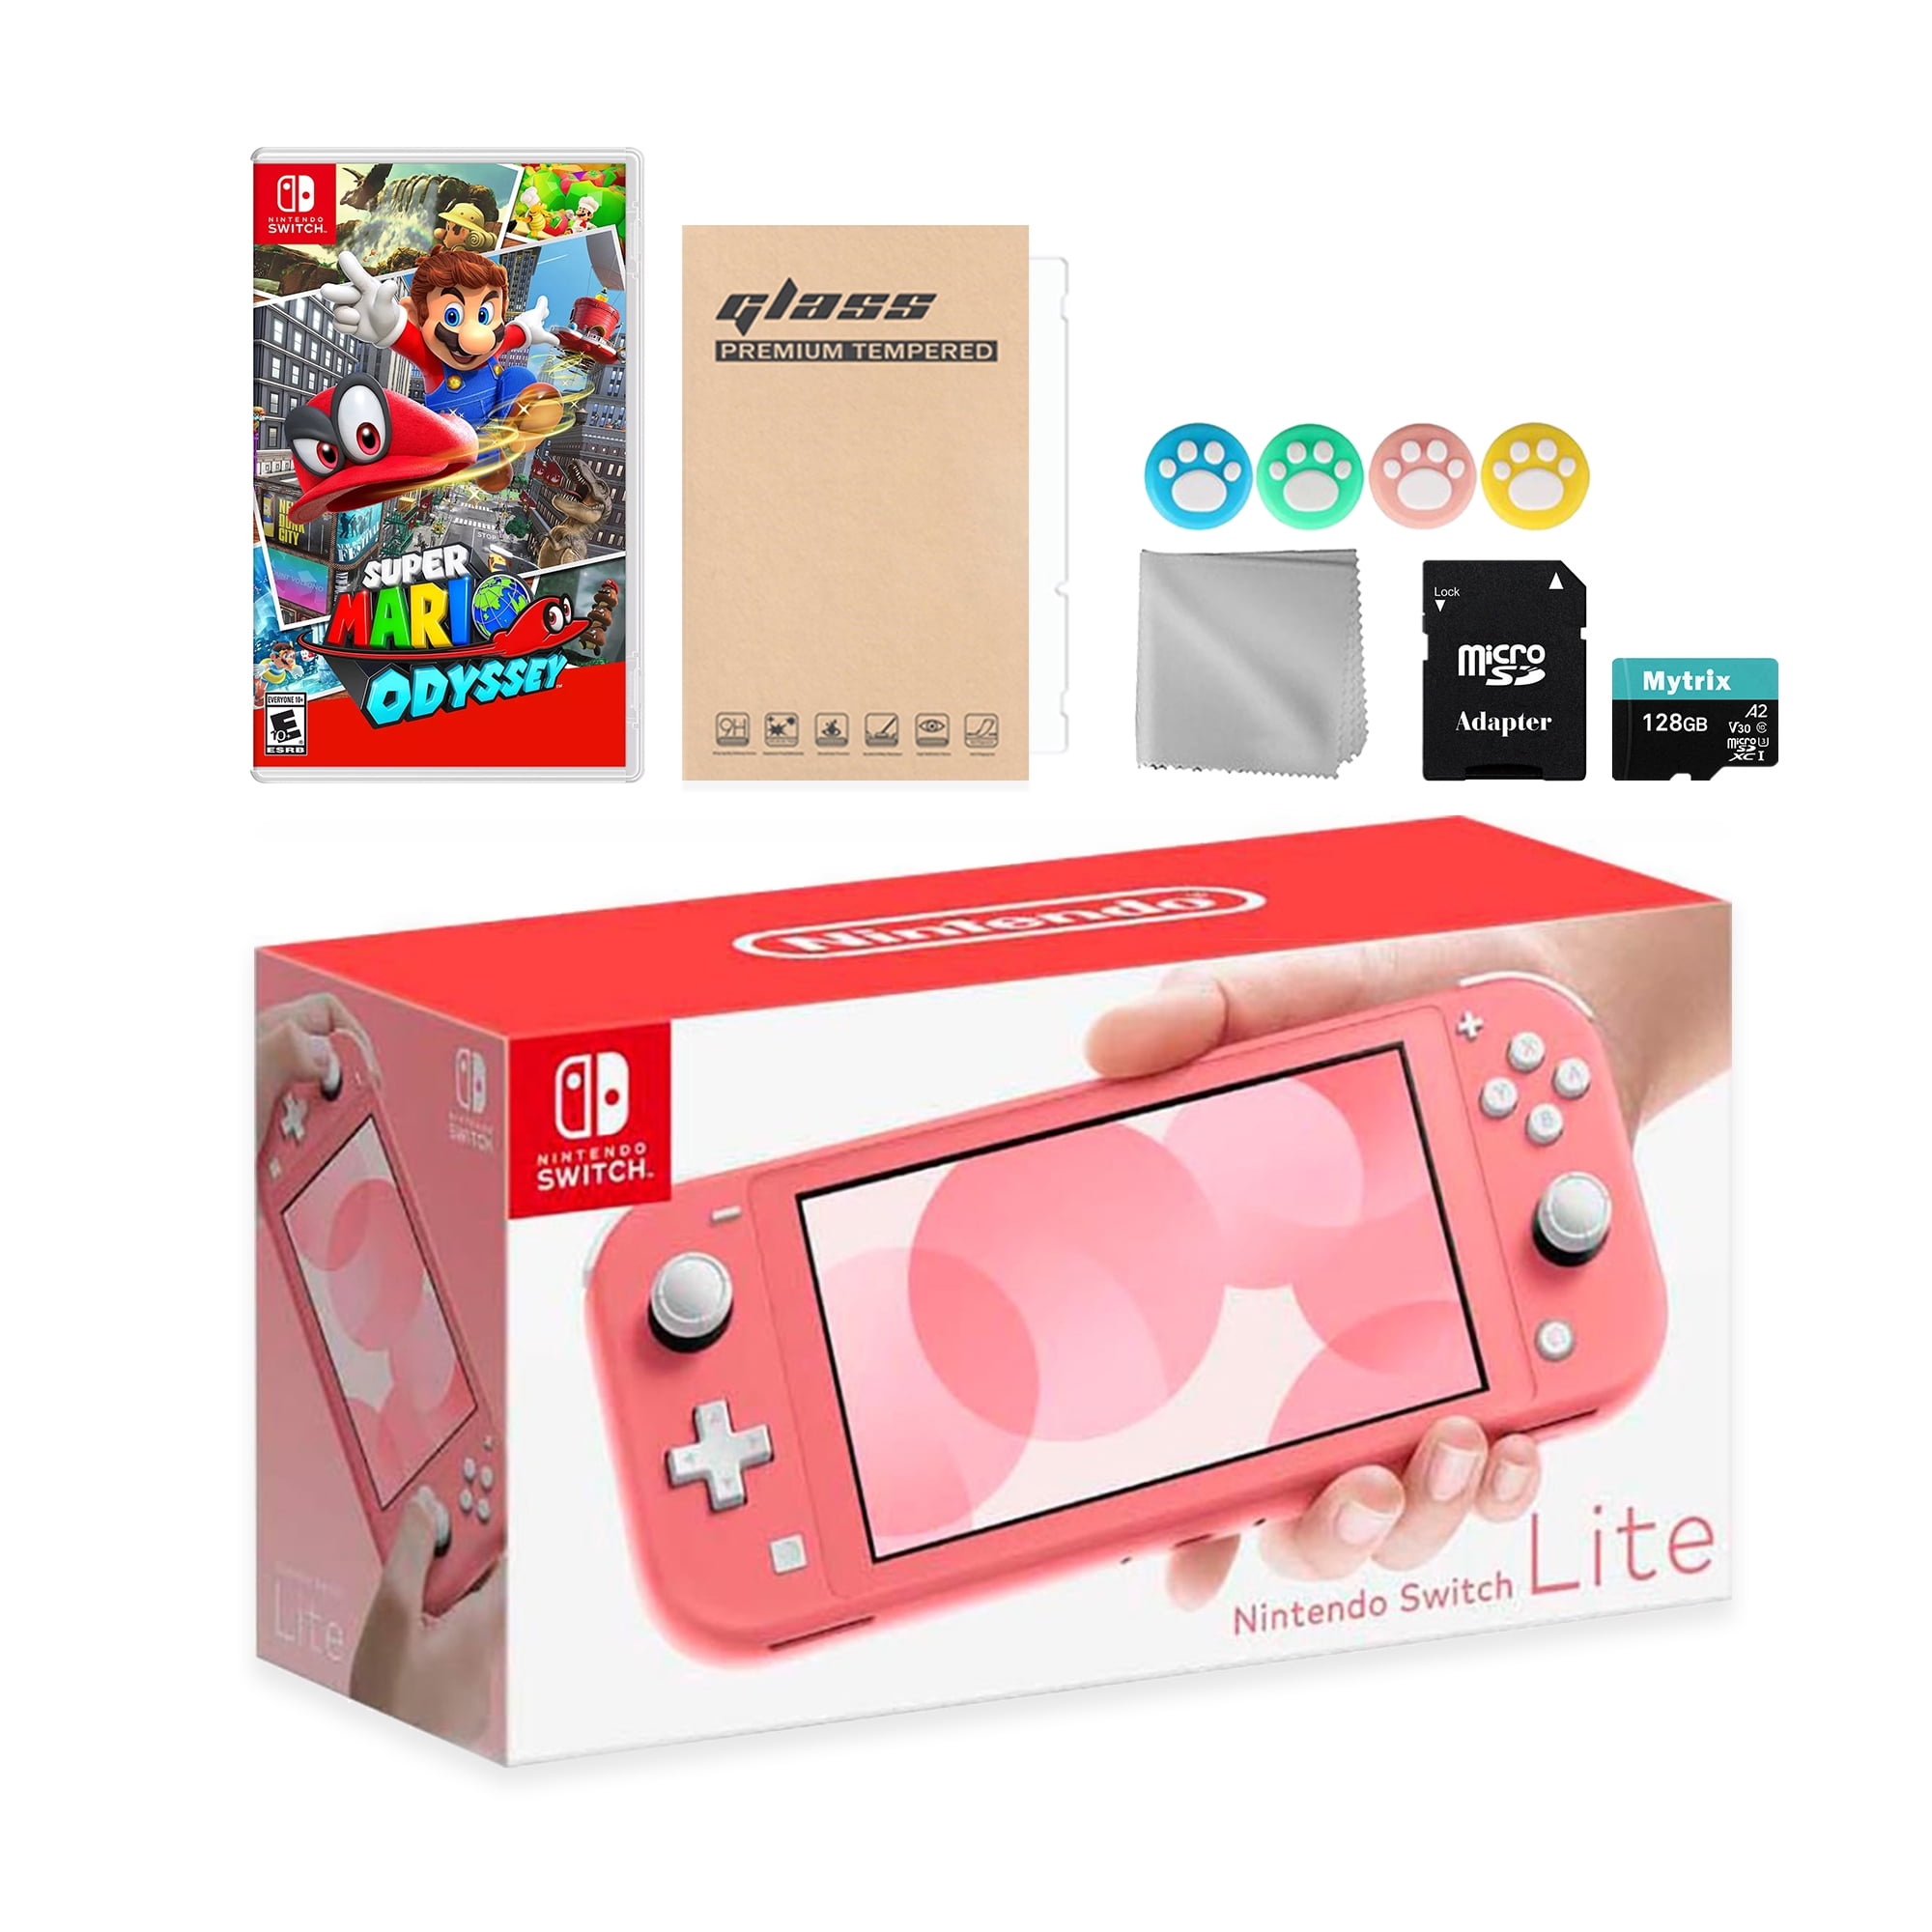 Super Mario Odyssey Nintendo Switch Game Deals 100% Official Original  Physical Game Card Platformer Genre for Switch OLED Lite - AliExpress